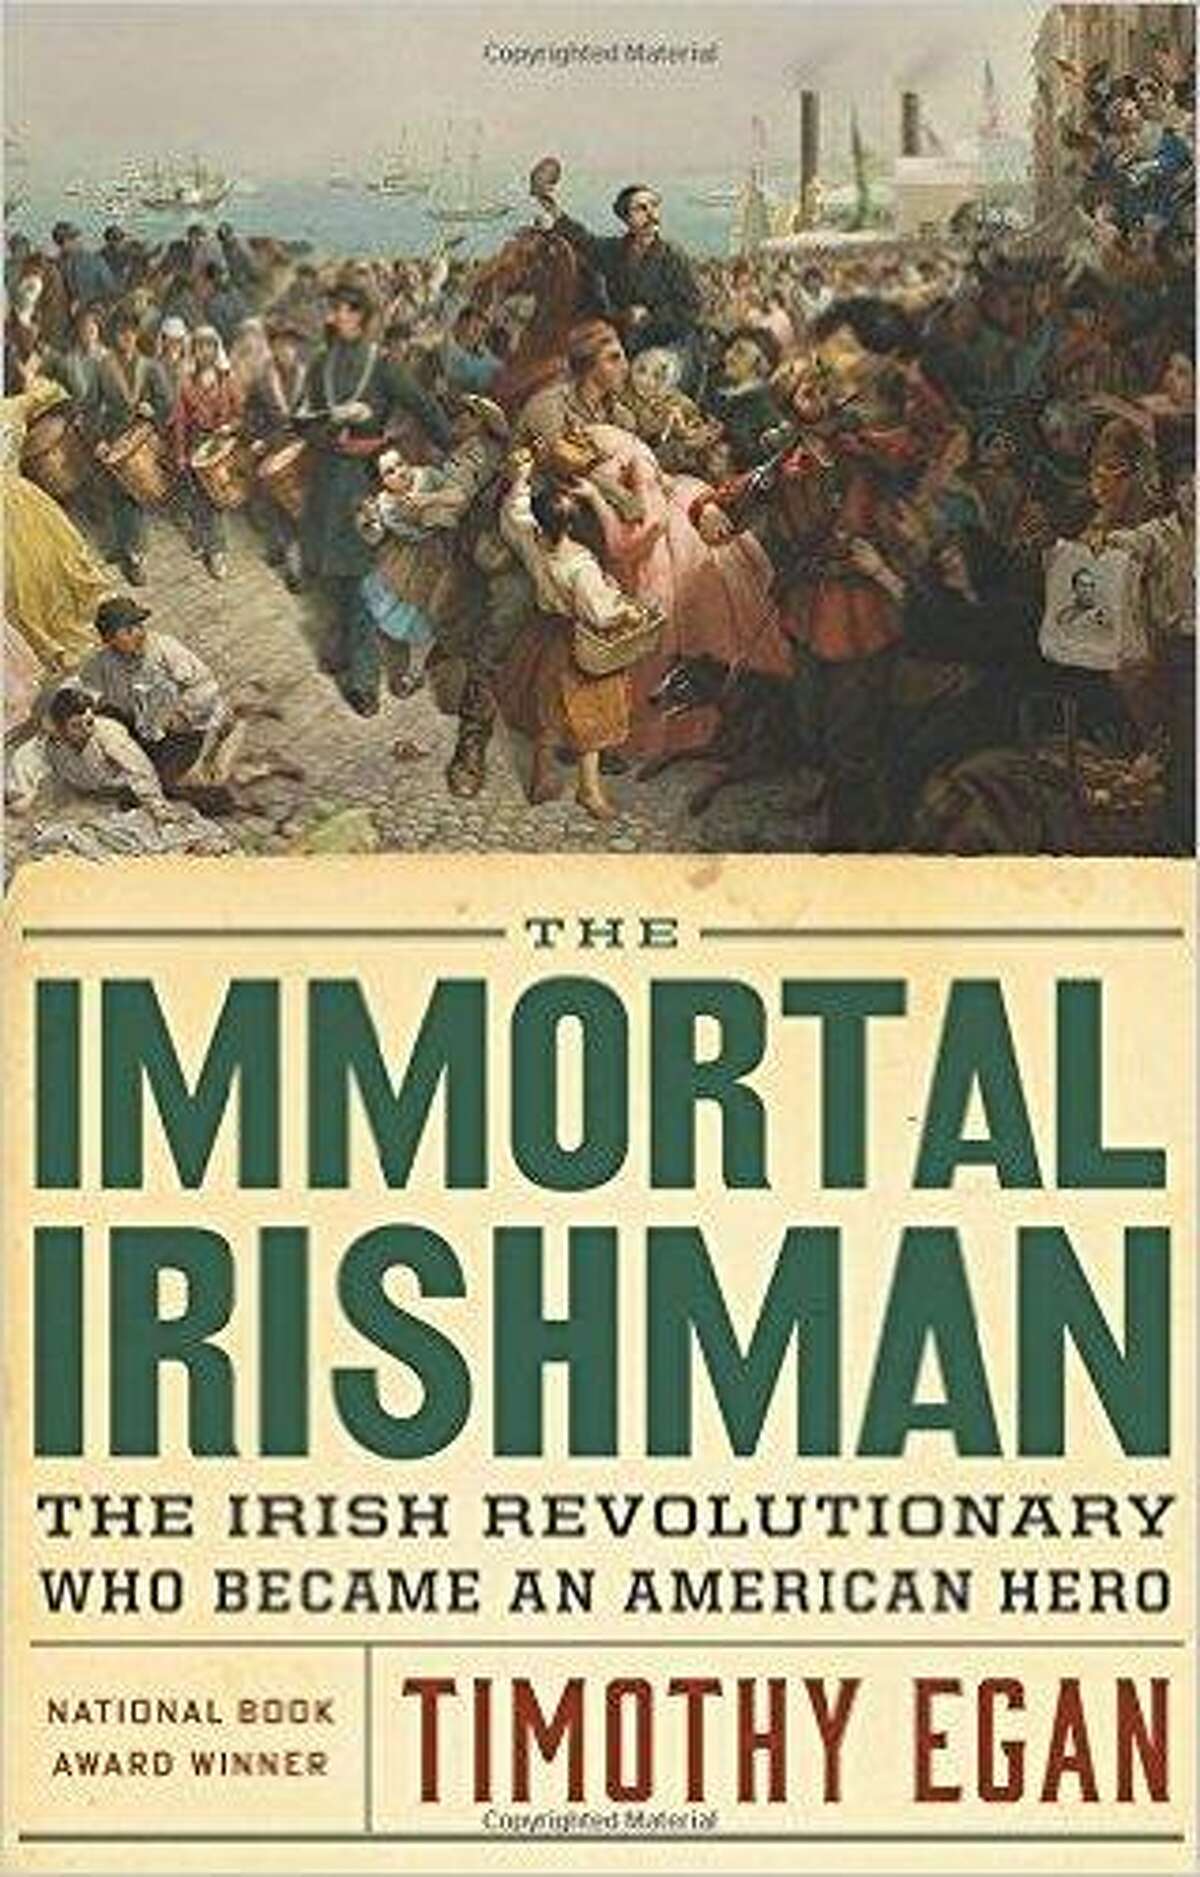 The Immortal Irishman by Timothy Egan